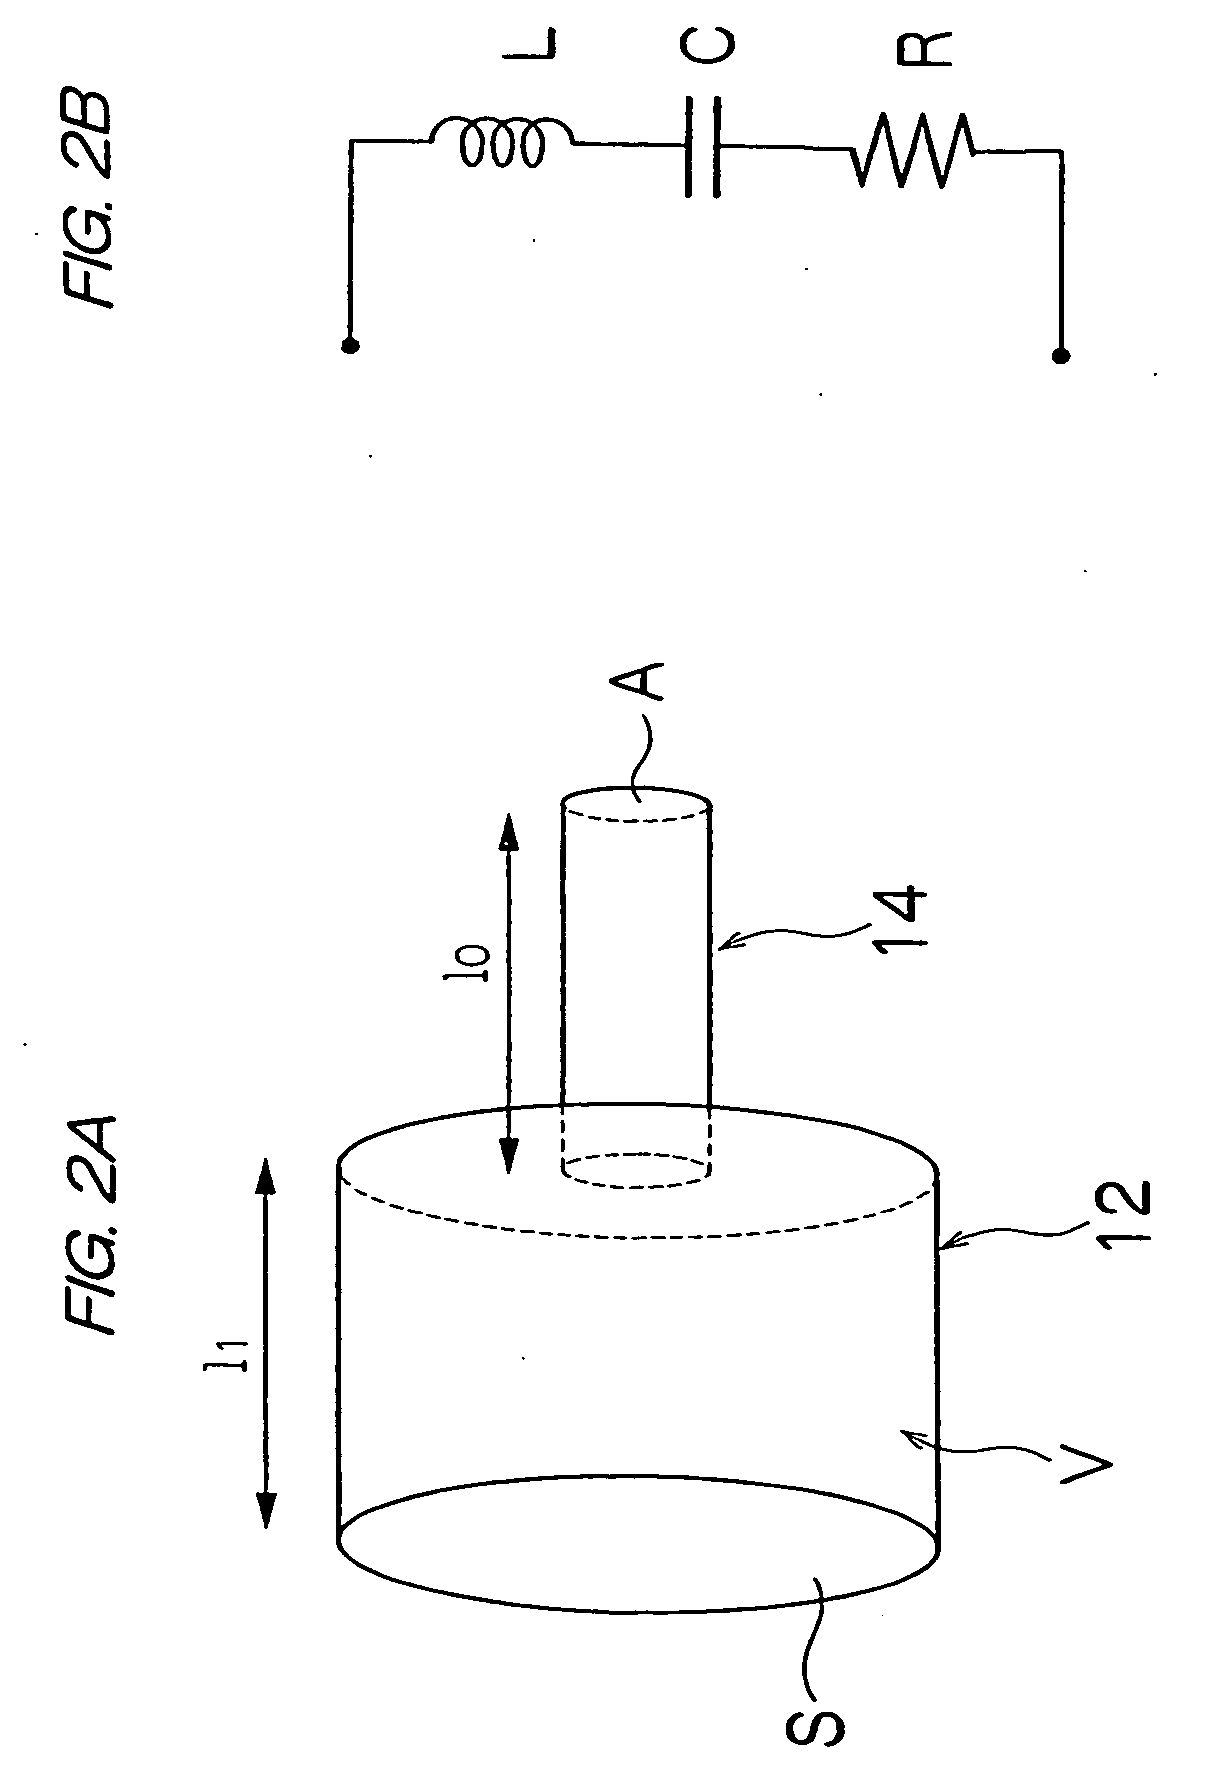 Droplet discharging method and apparatus